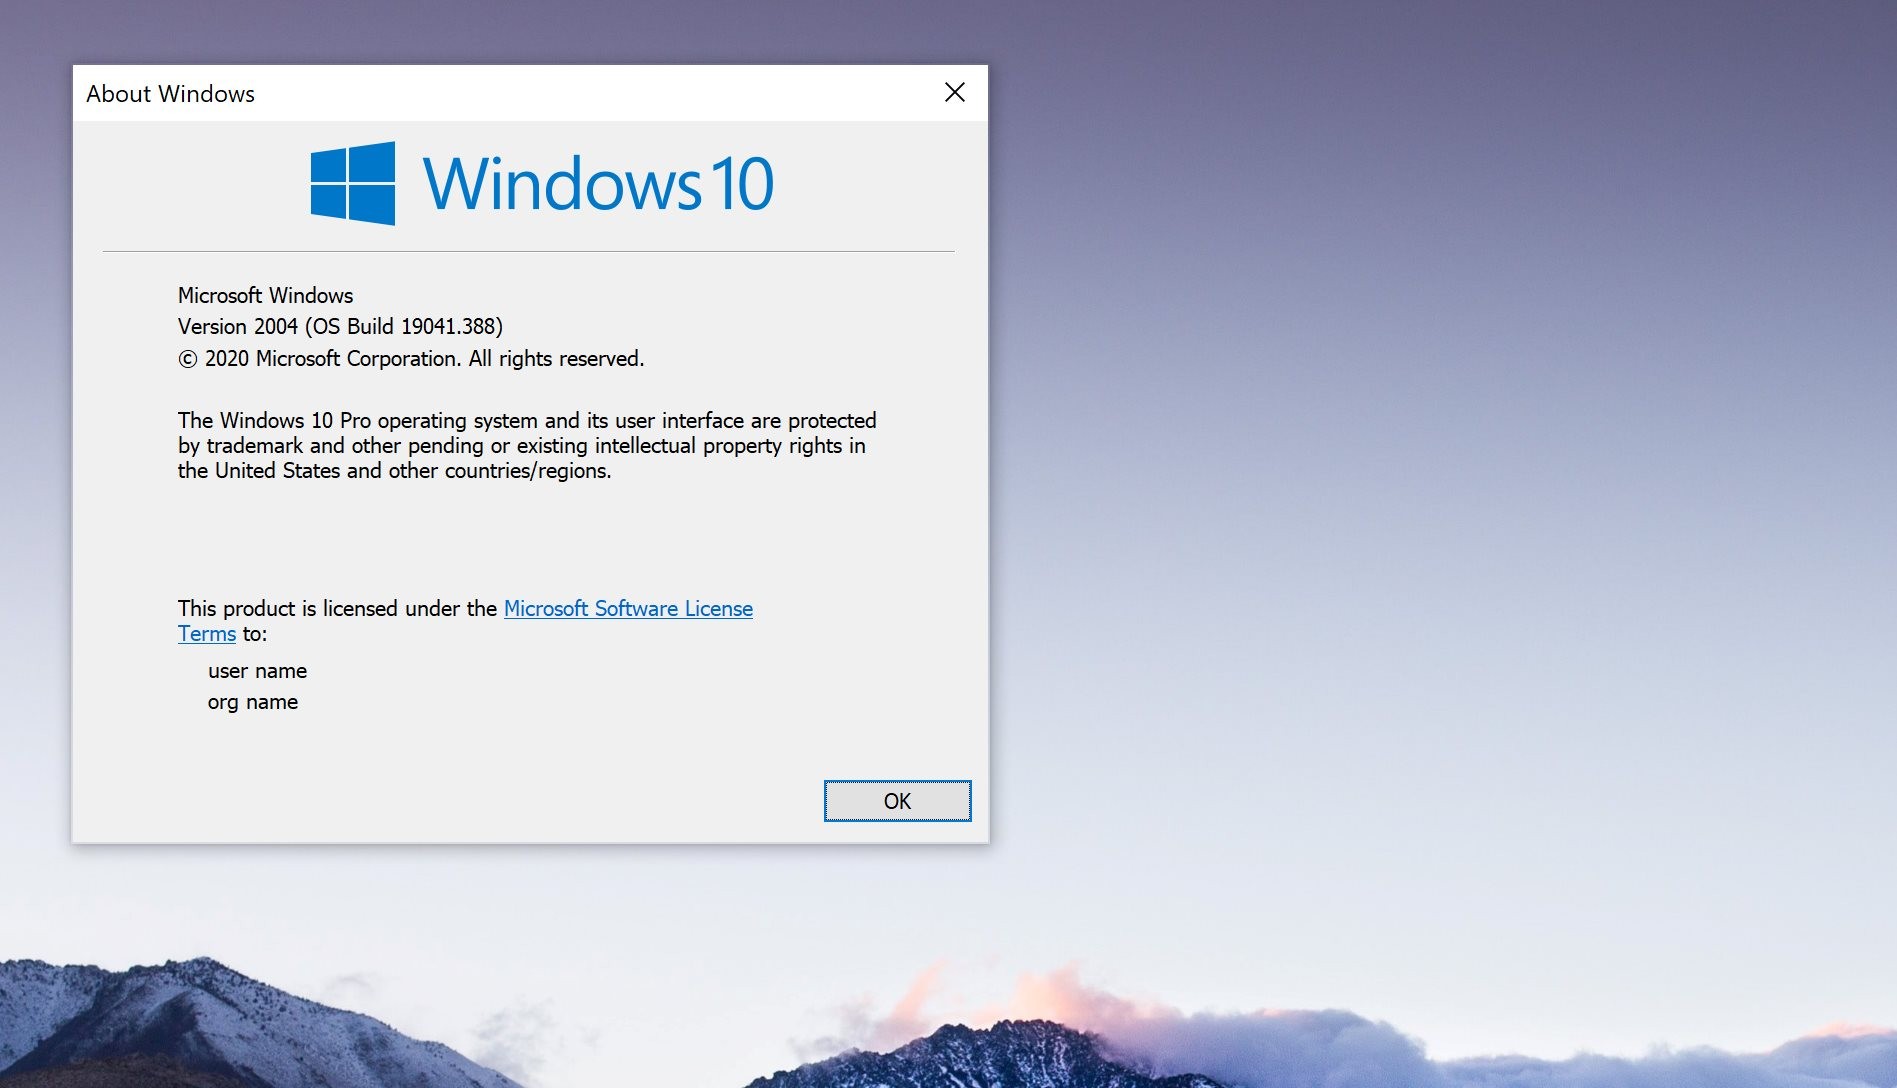 windows 10 cumulative updates fail to install